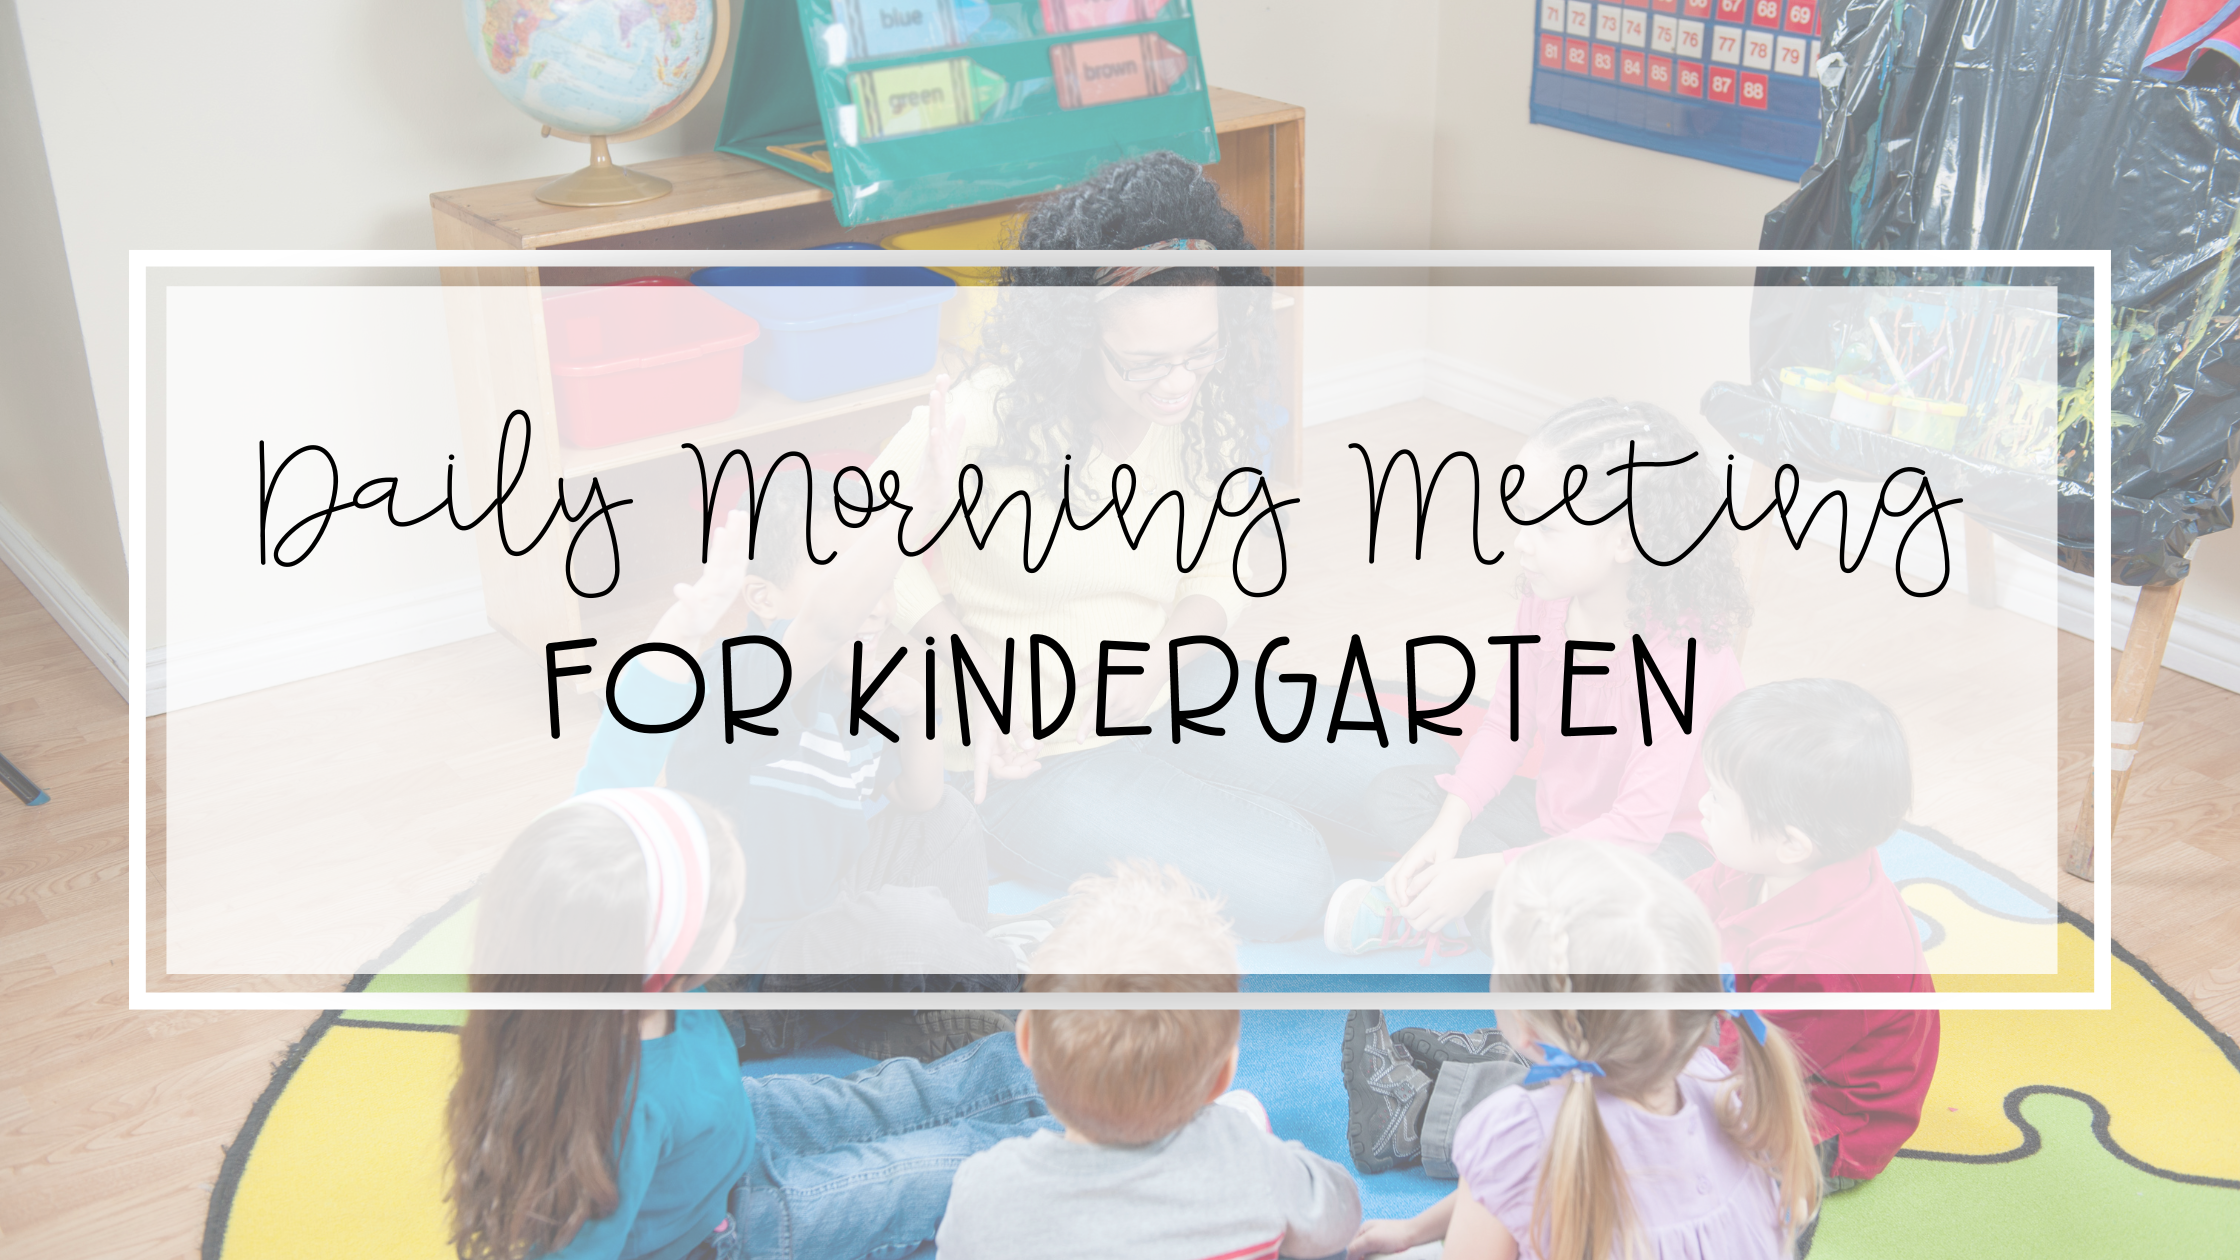 15 Guaranteed Easy Daily Morning Meeting Activities For Kindergarten